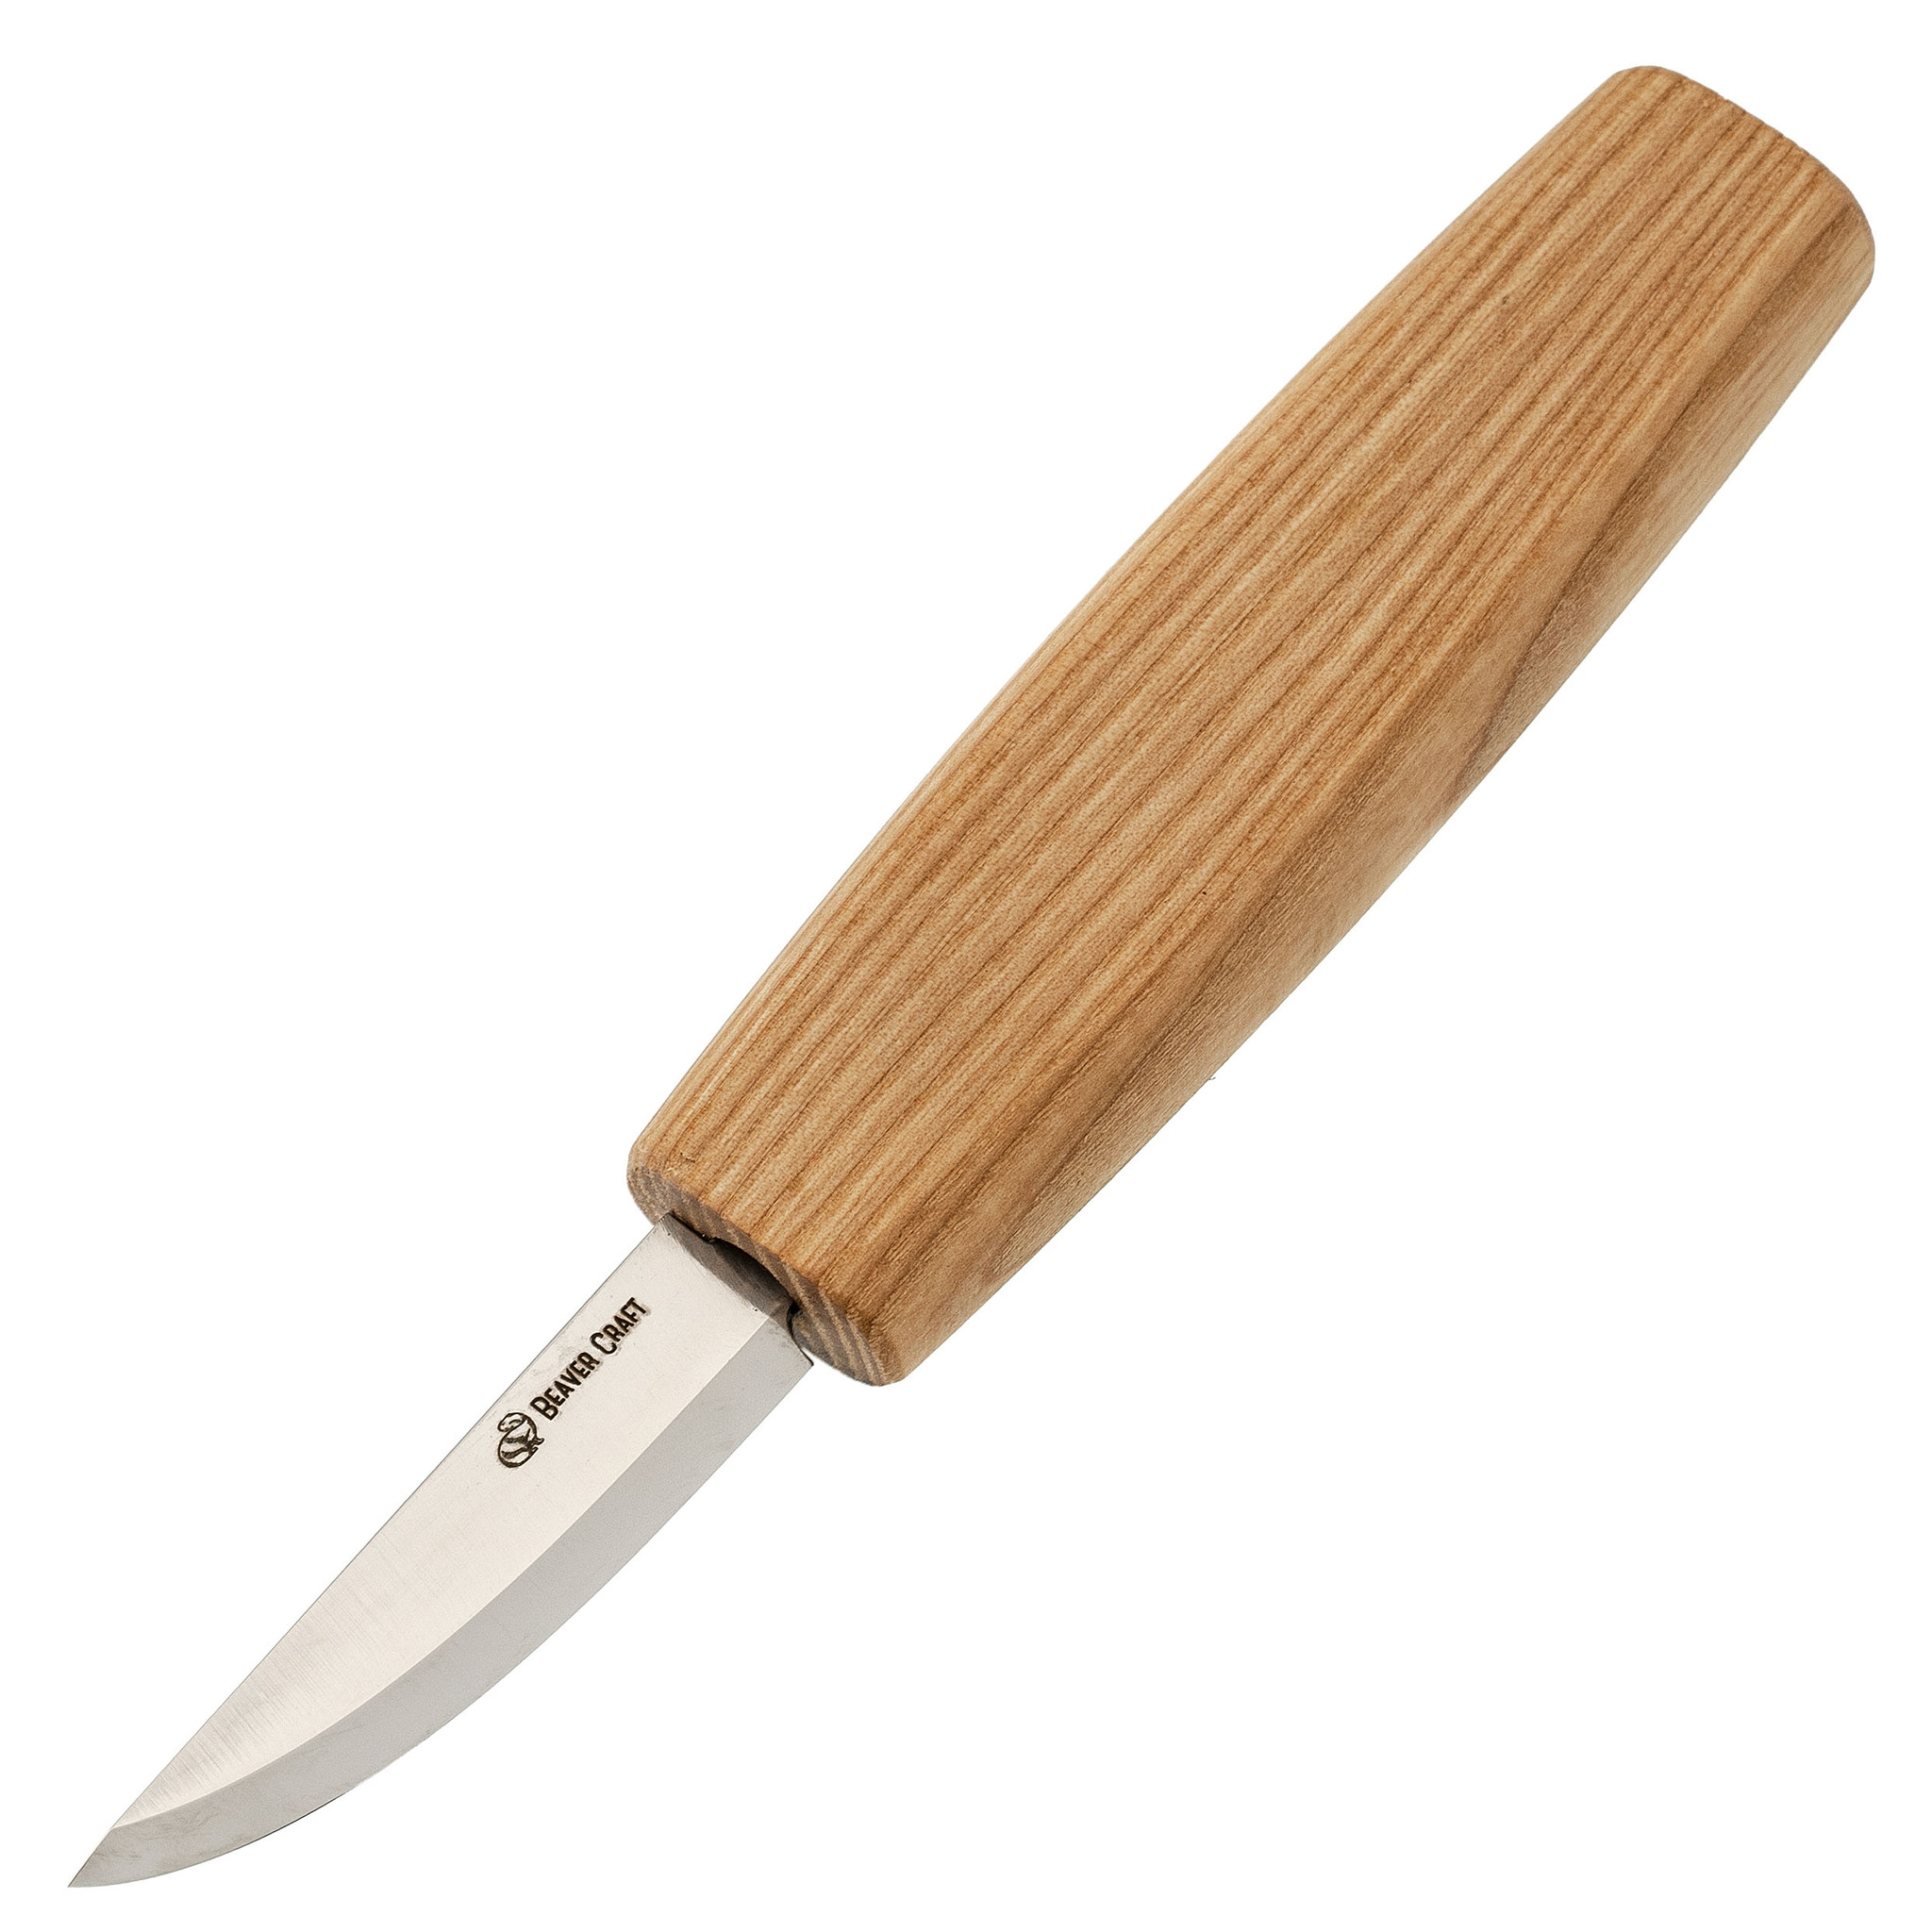 Нож для резьбы по дереву Beavercraft Small Whittling Knife, сталь 80CrV2, ясень